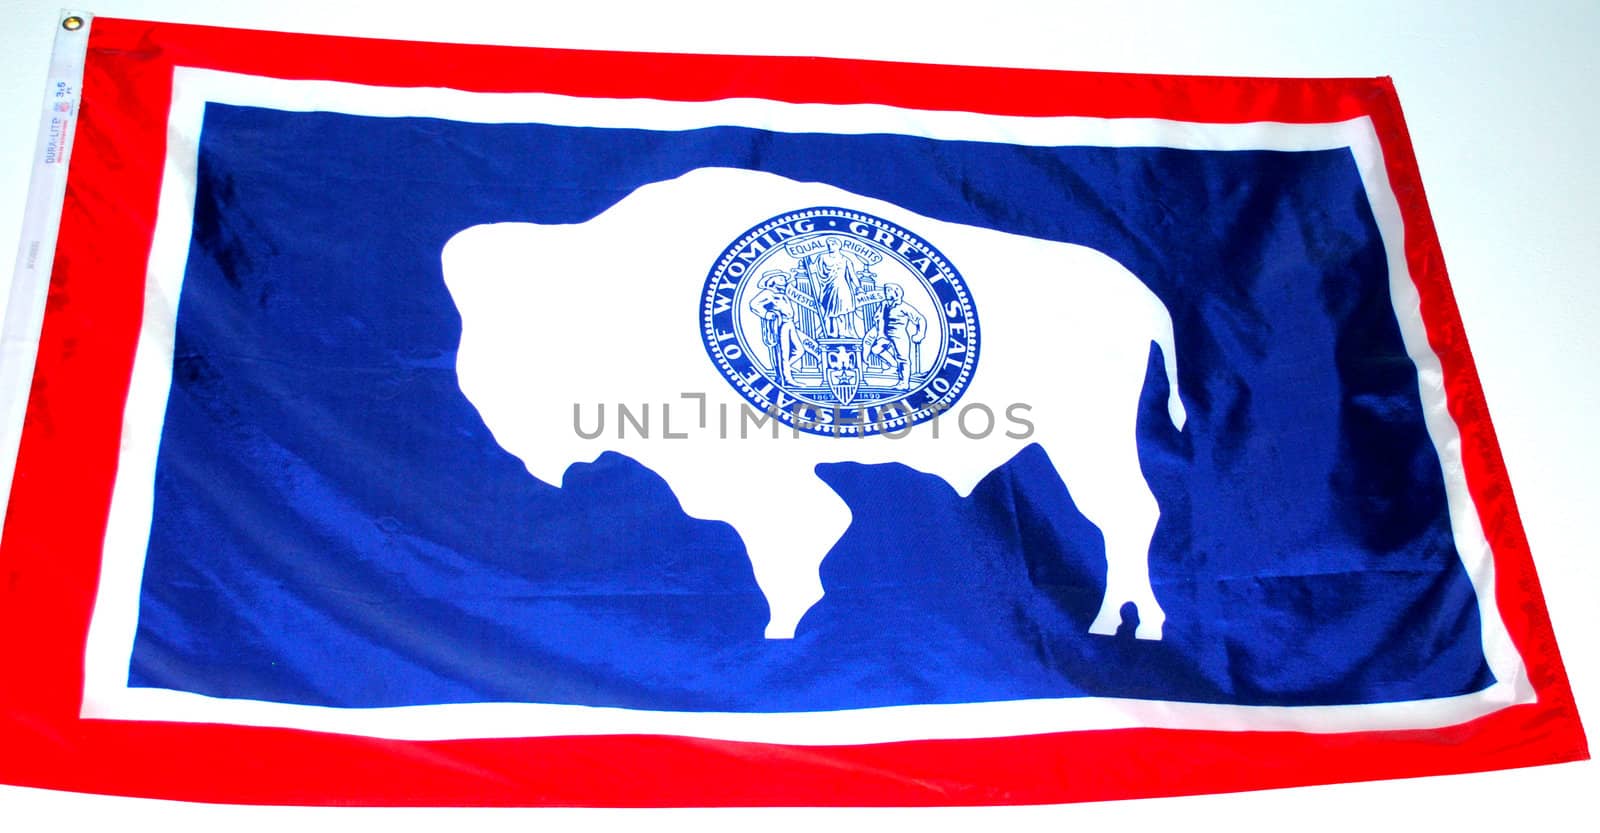 Wyoming state flag displayed outdoors.